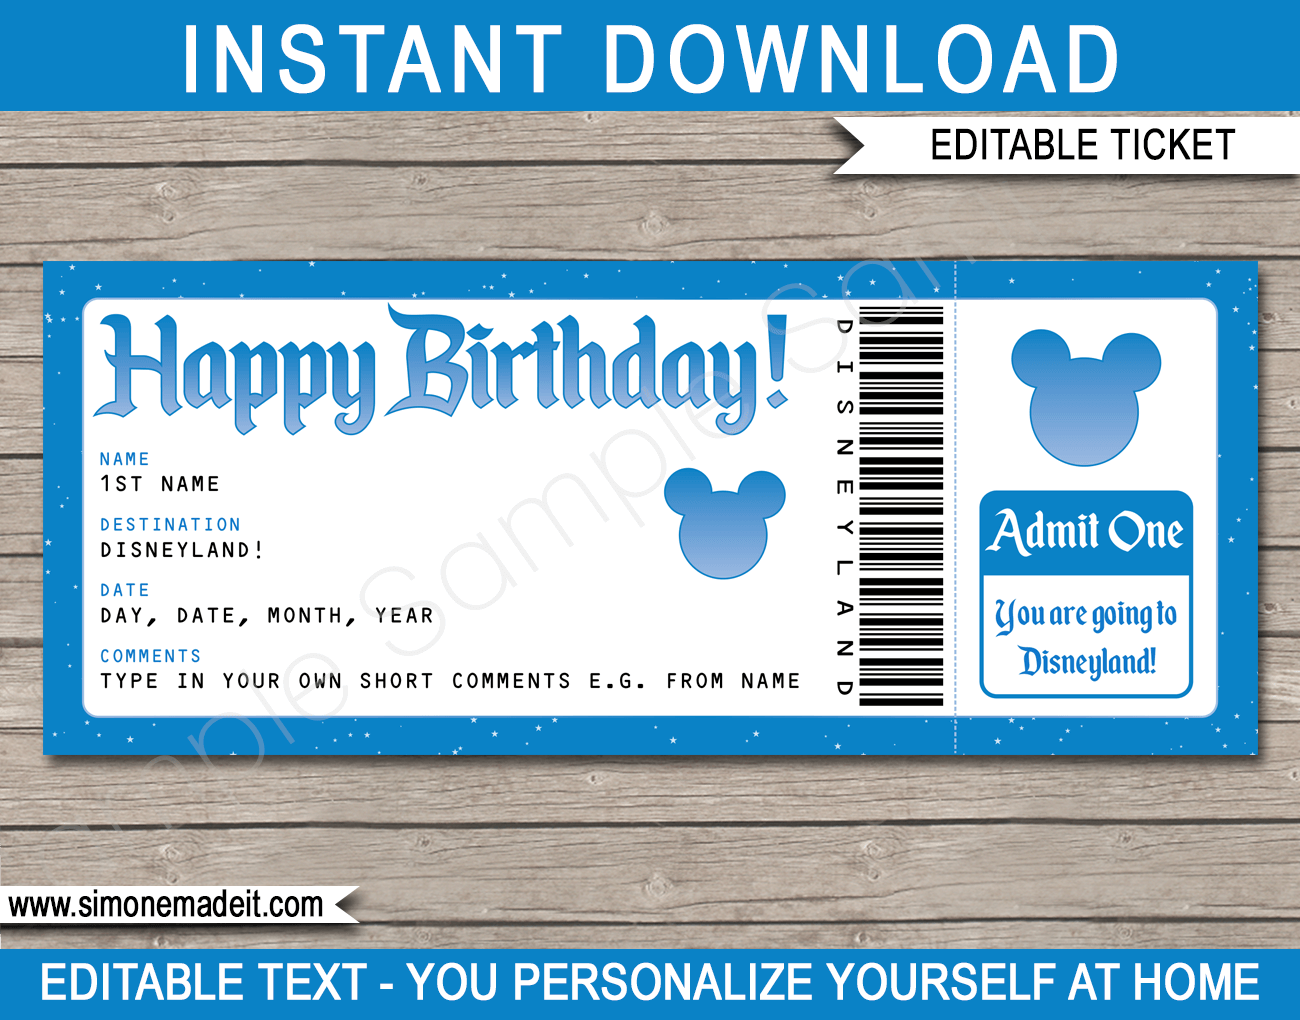 Free Disneyland Ticket Template FREE PRINTABLE TEMPLATES